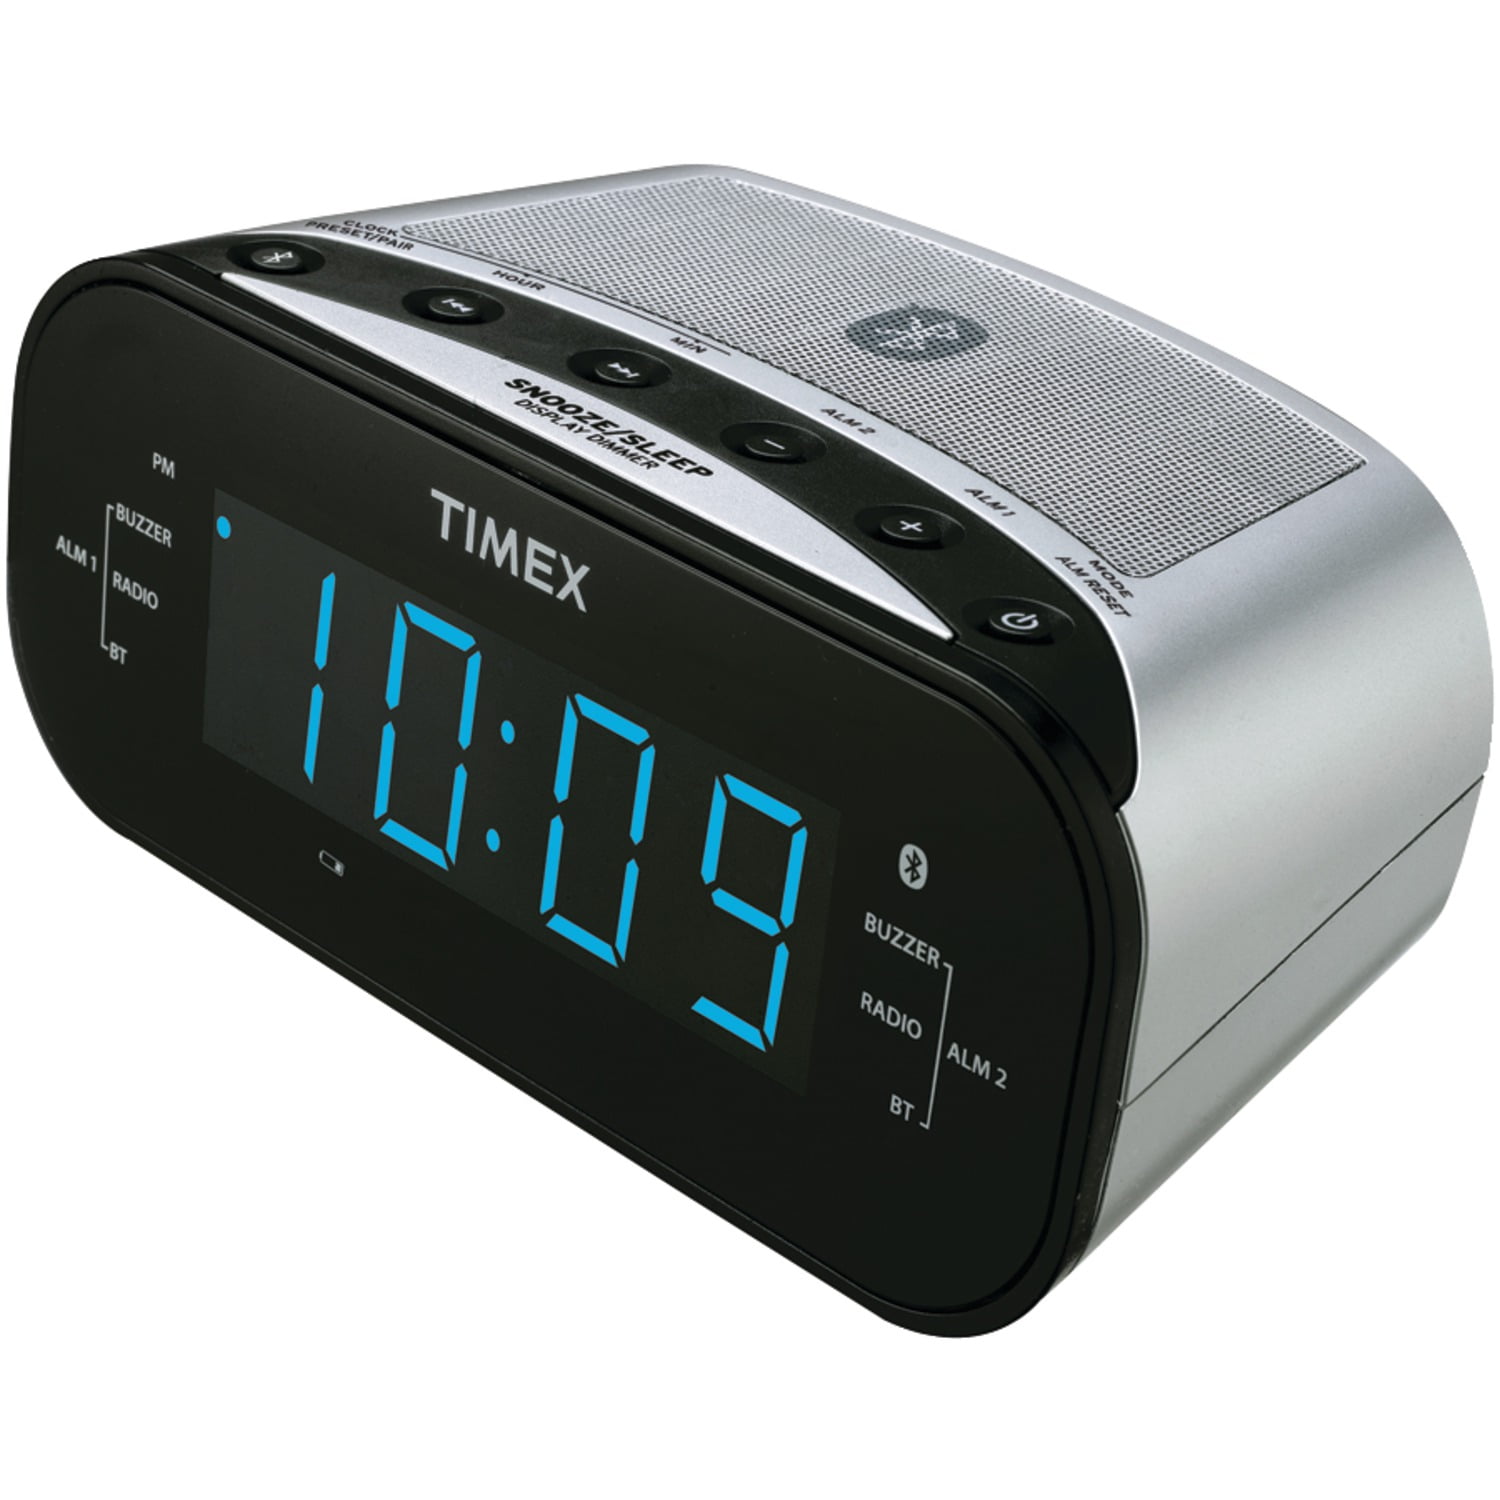 Timex Desktop Clock Radio - 2 x Alarm - FM, AM - Manual Wake-up Timer -  